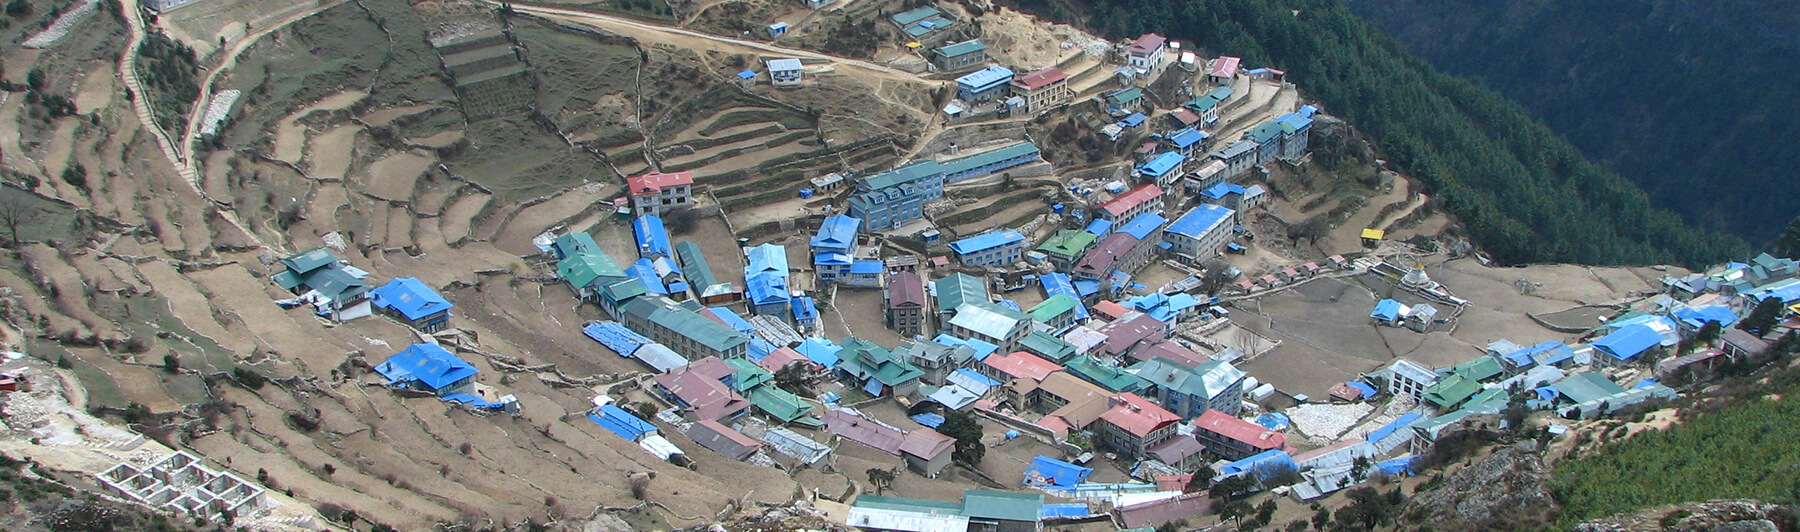 Namche Bazaar, Nepal